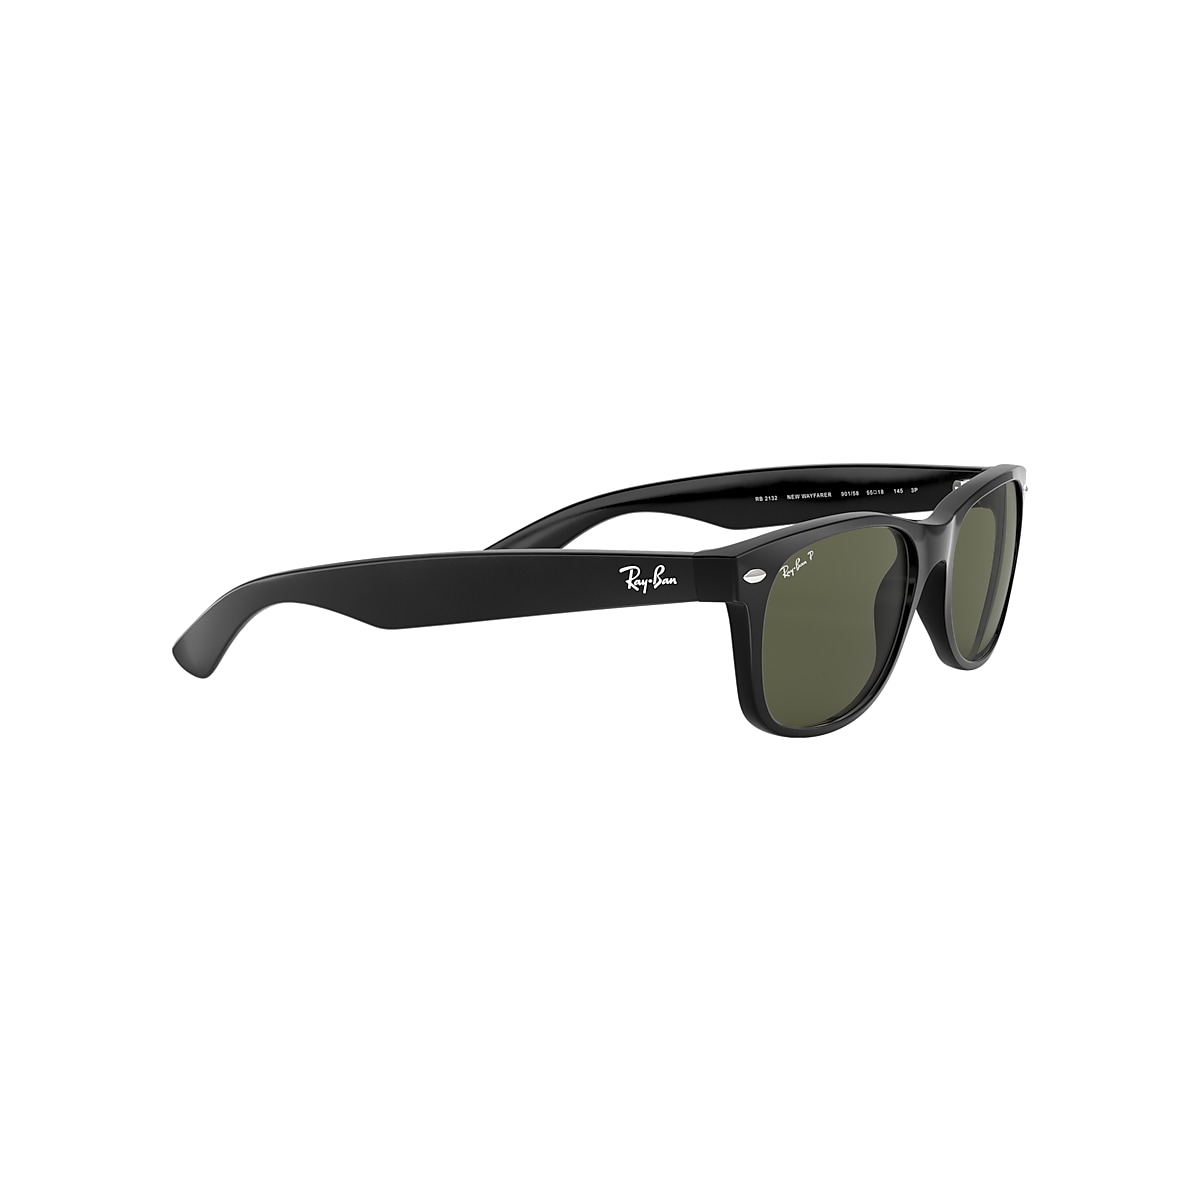 kiwi materiale sladre NEW WAYFARER CLASSIC Sunglasses in Black and Green - RB2132 | Ray-Ban® GB